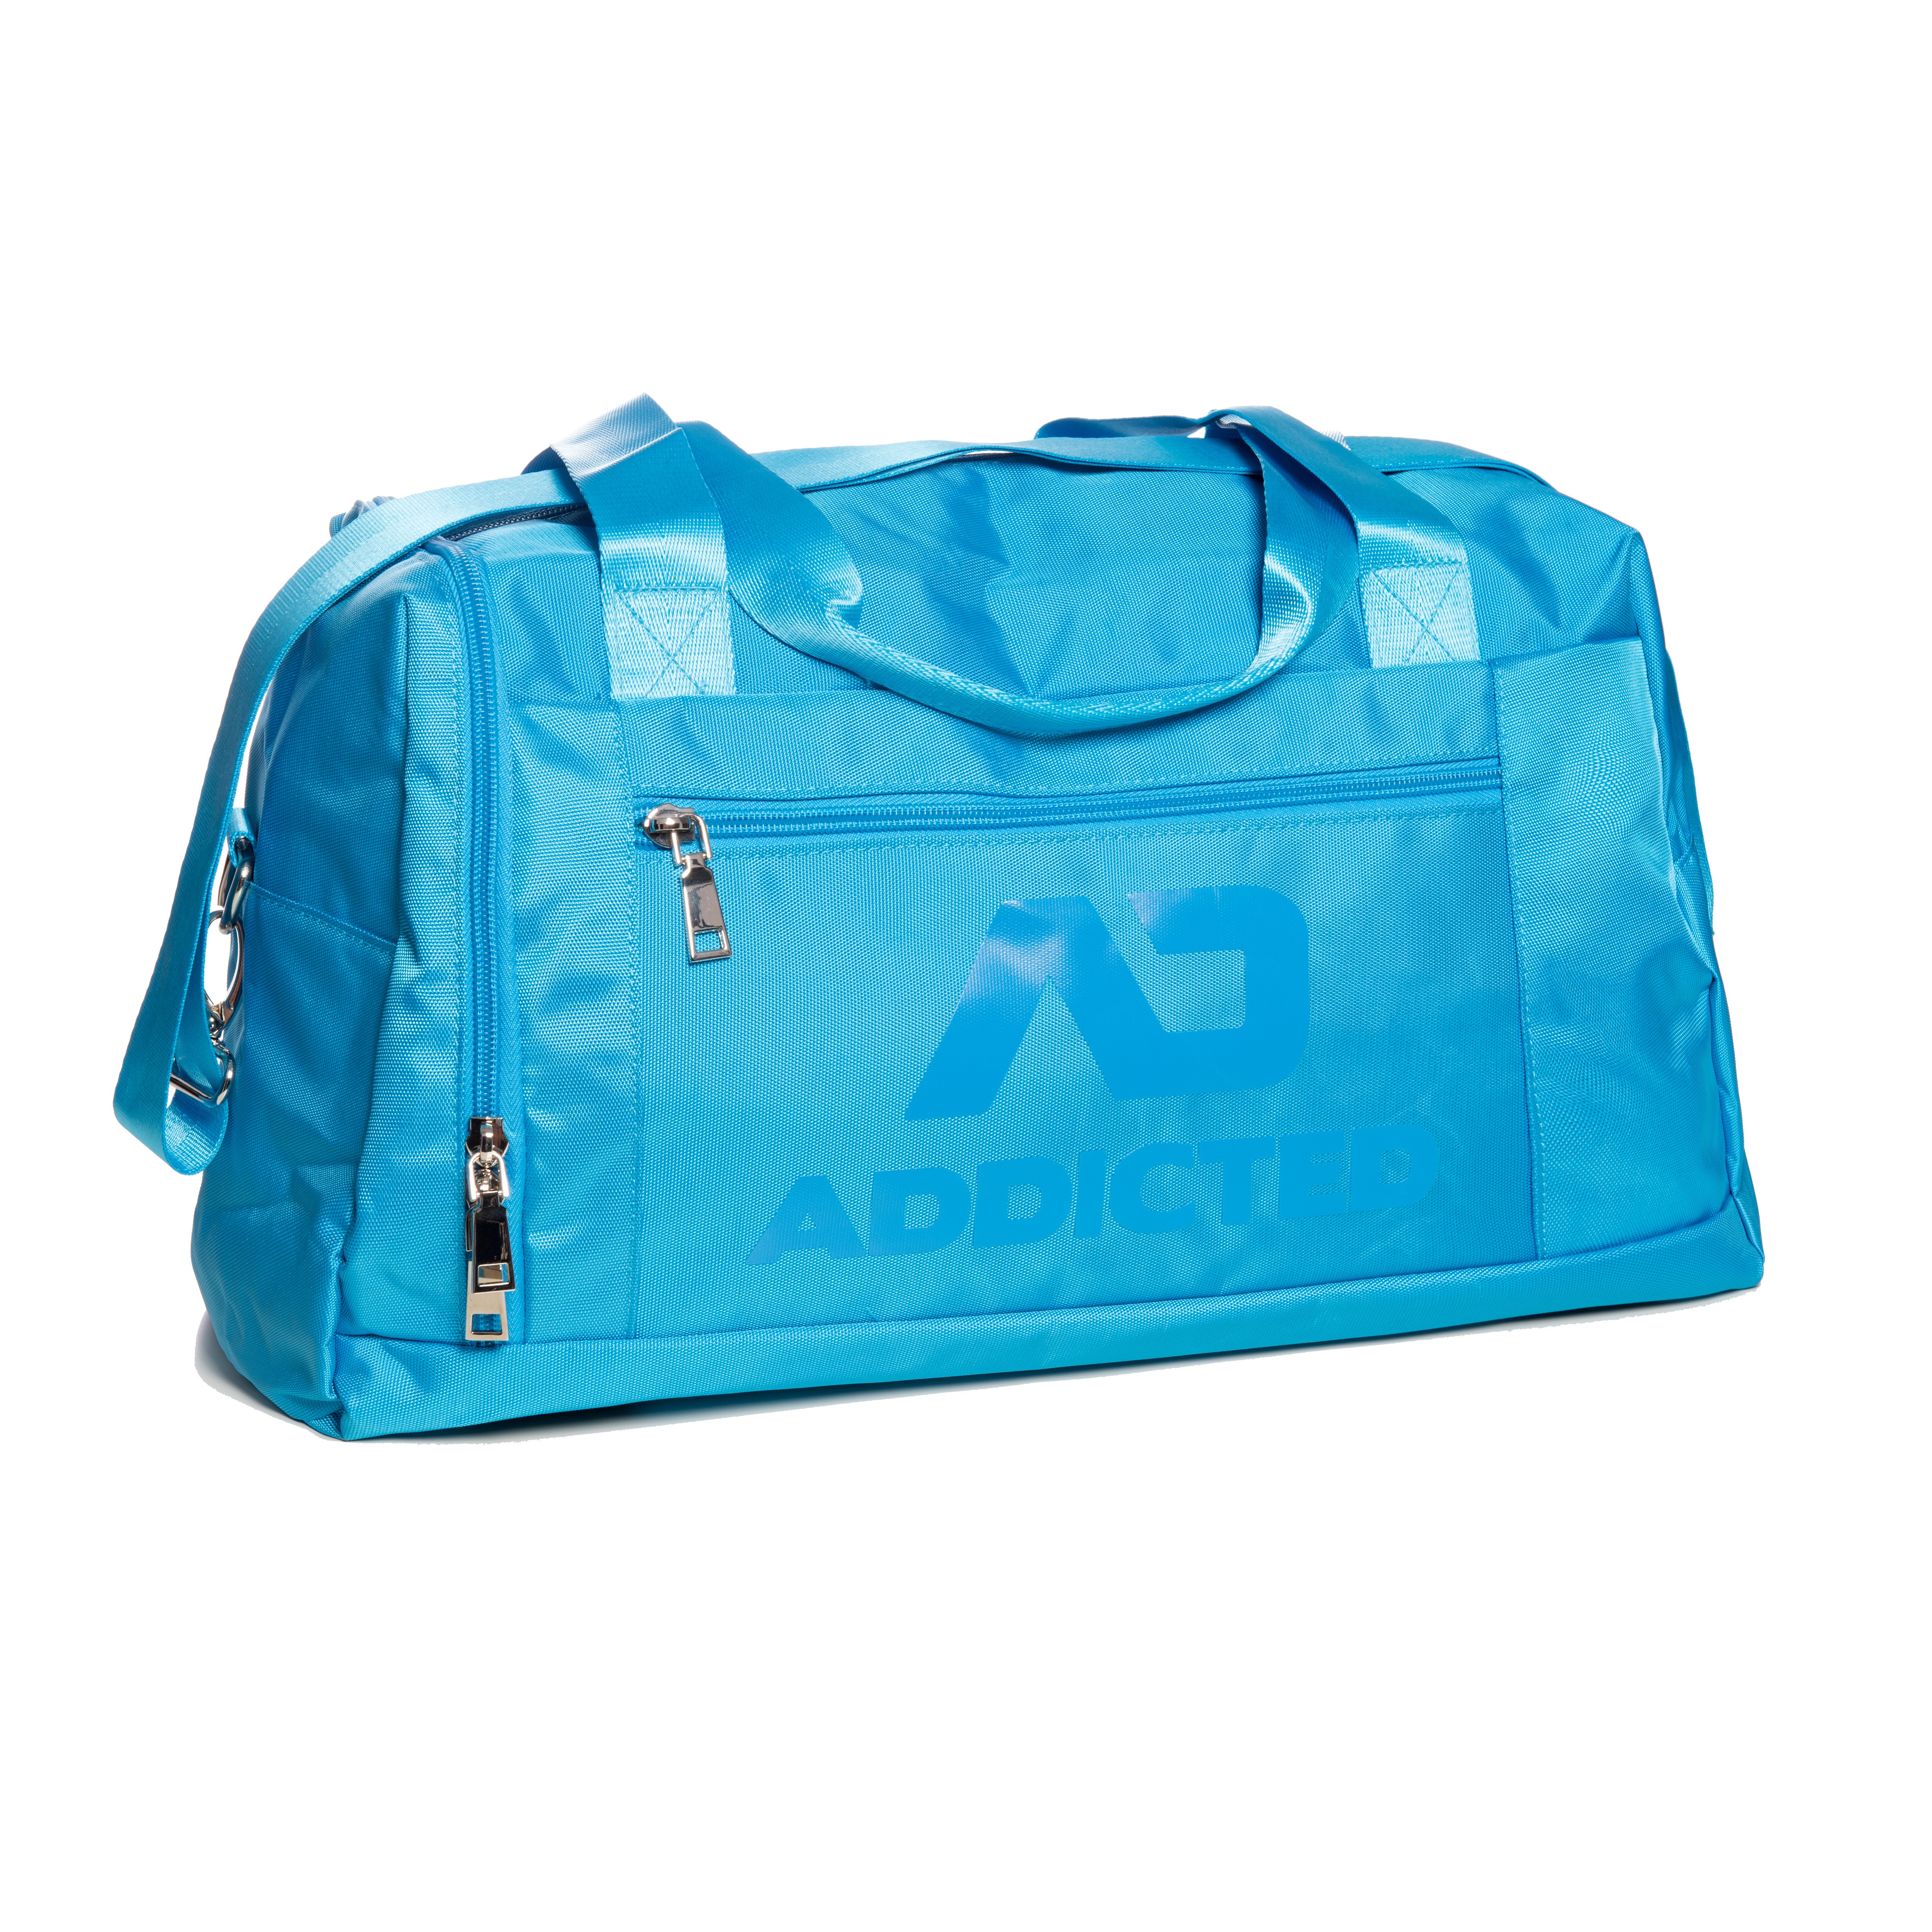 Buy Reebok Polyester 40 cms Black Drawstring Gym Bag (AO0510) at Amazon.in